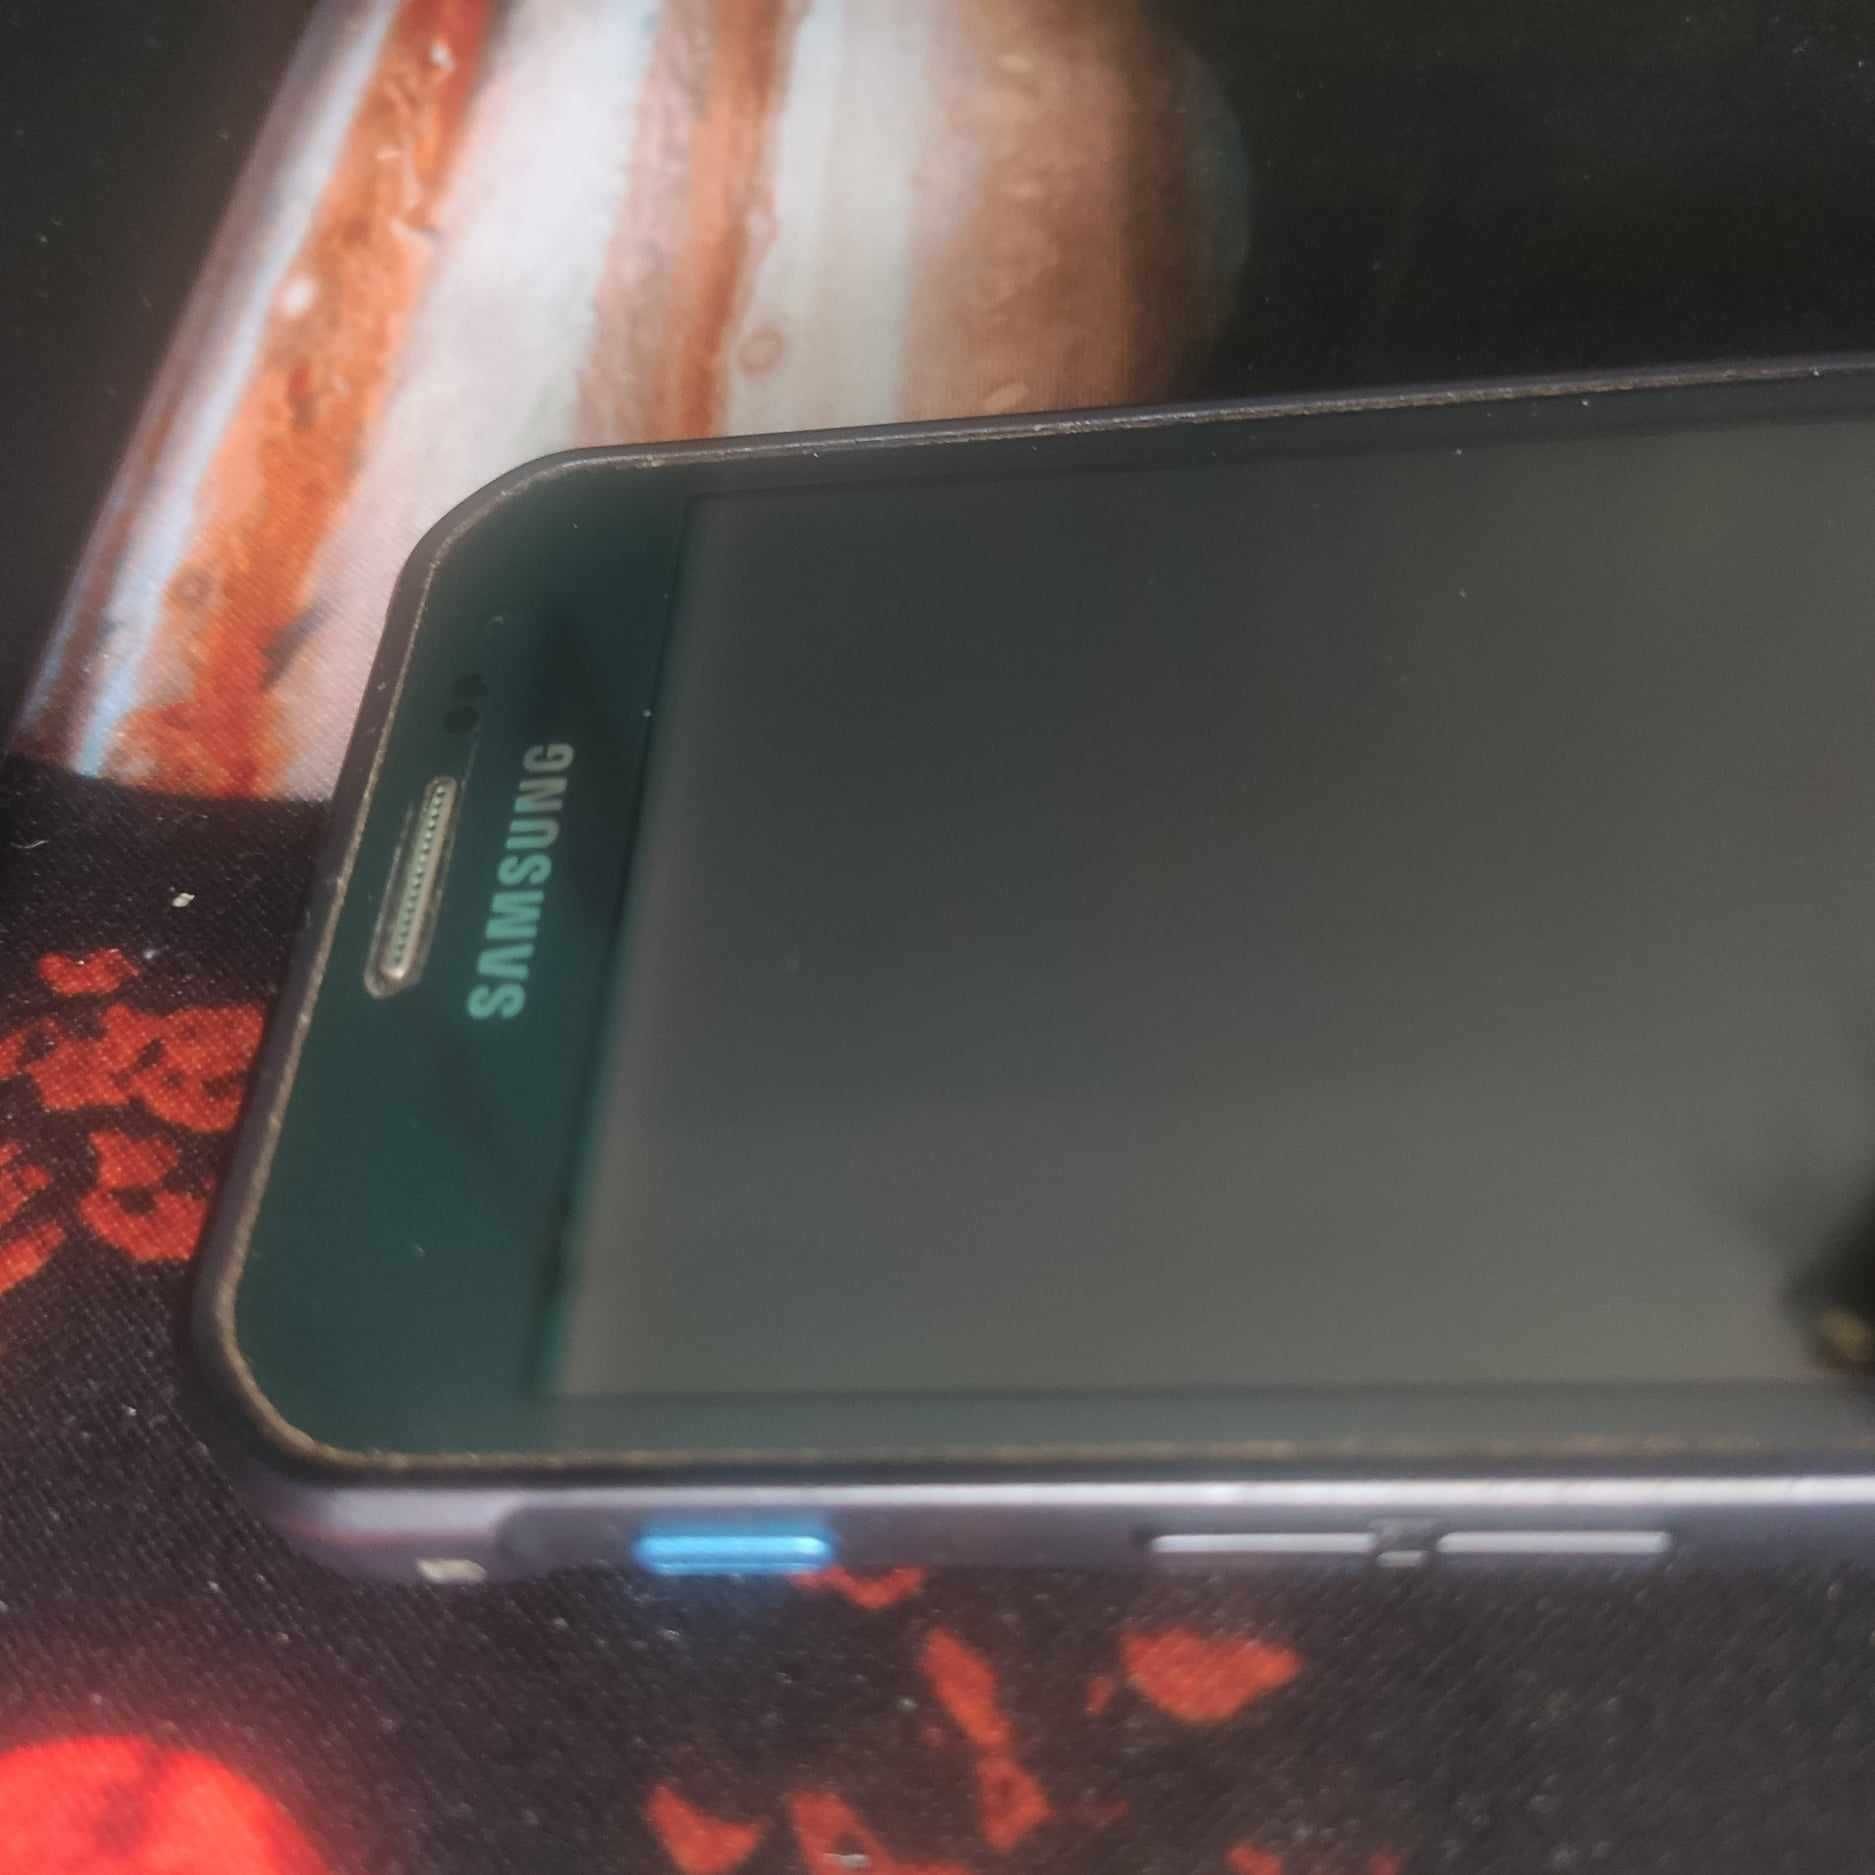 Samsung galaxy xcover 3